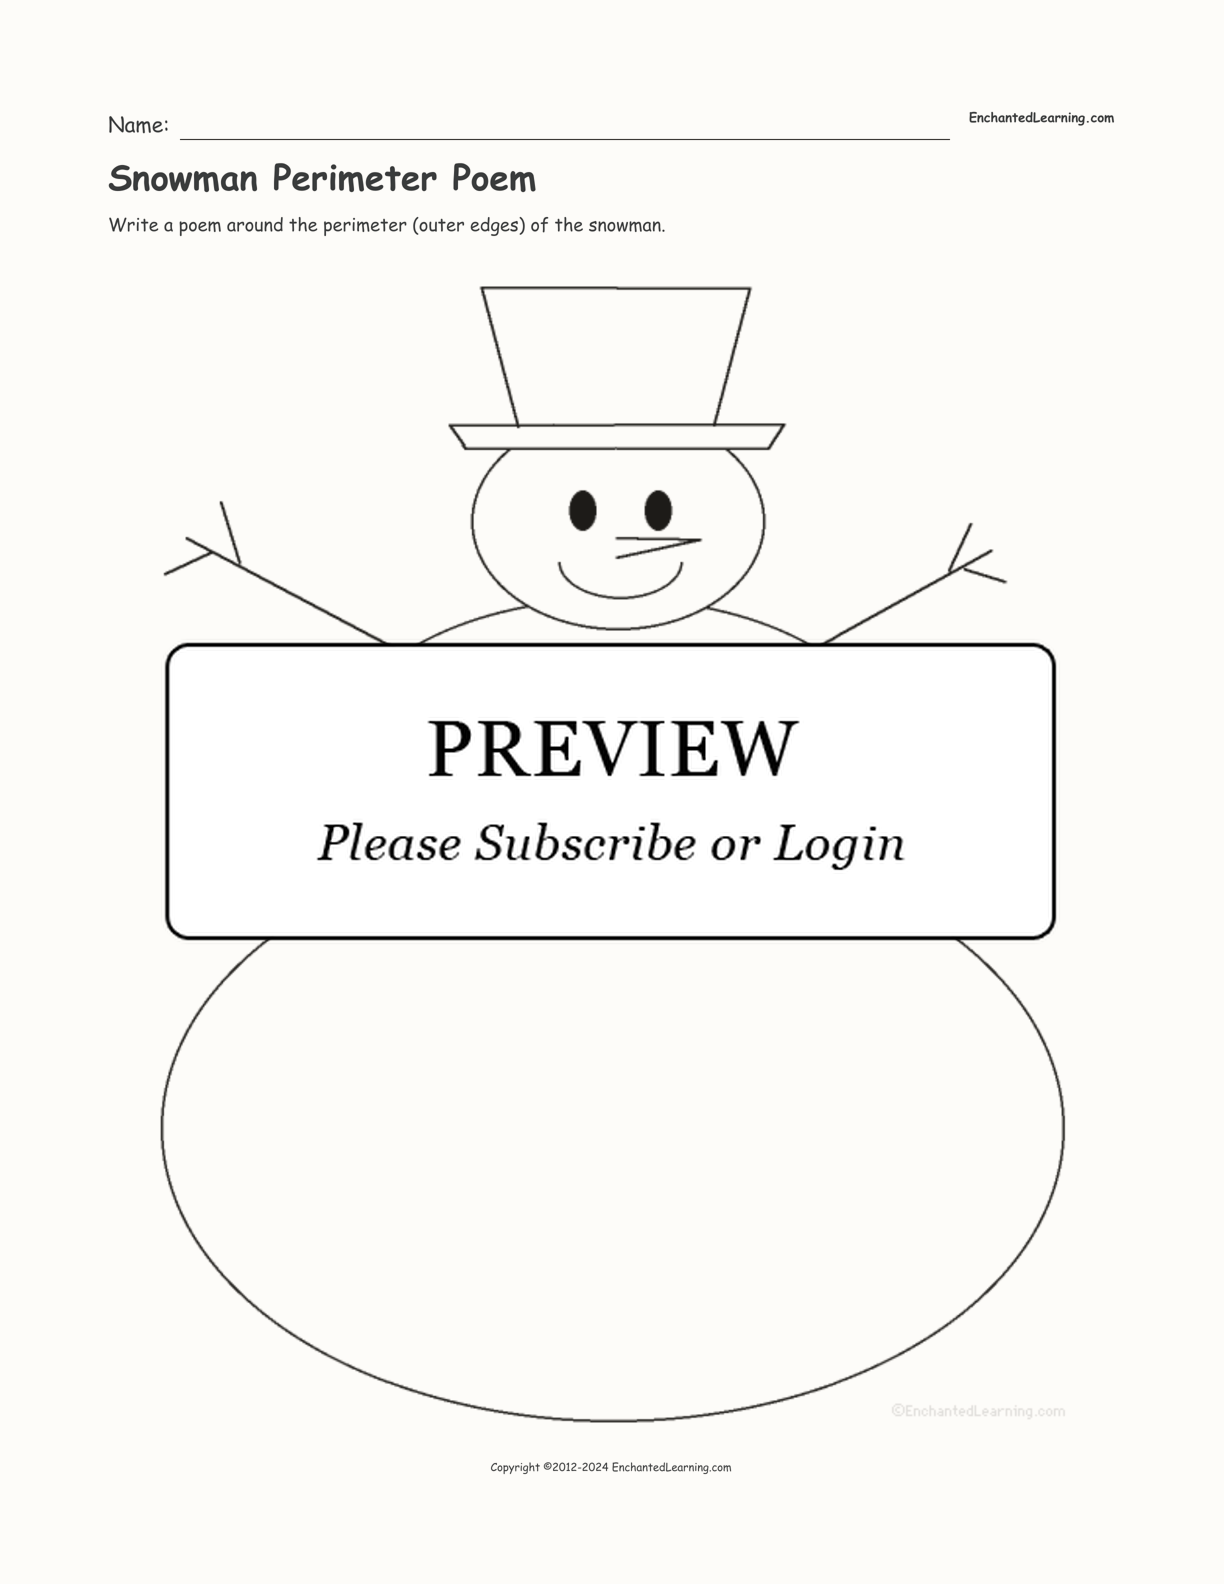 Snowman Perimeter Poem interactive worksheet page 1